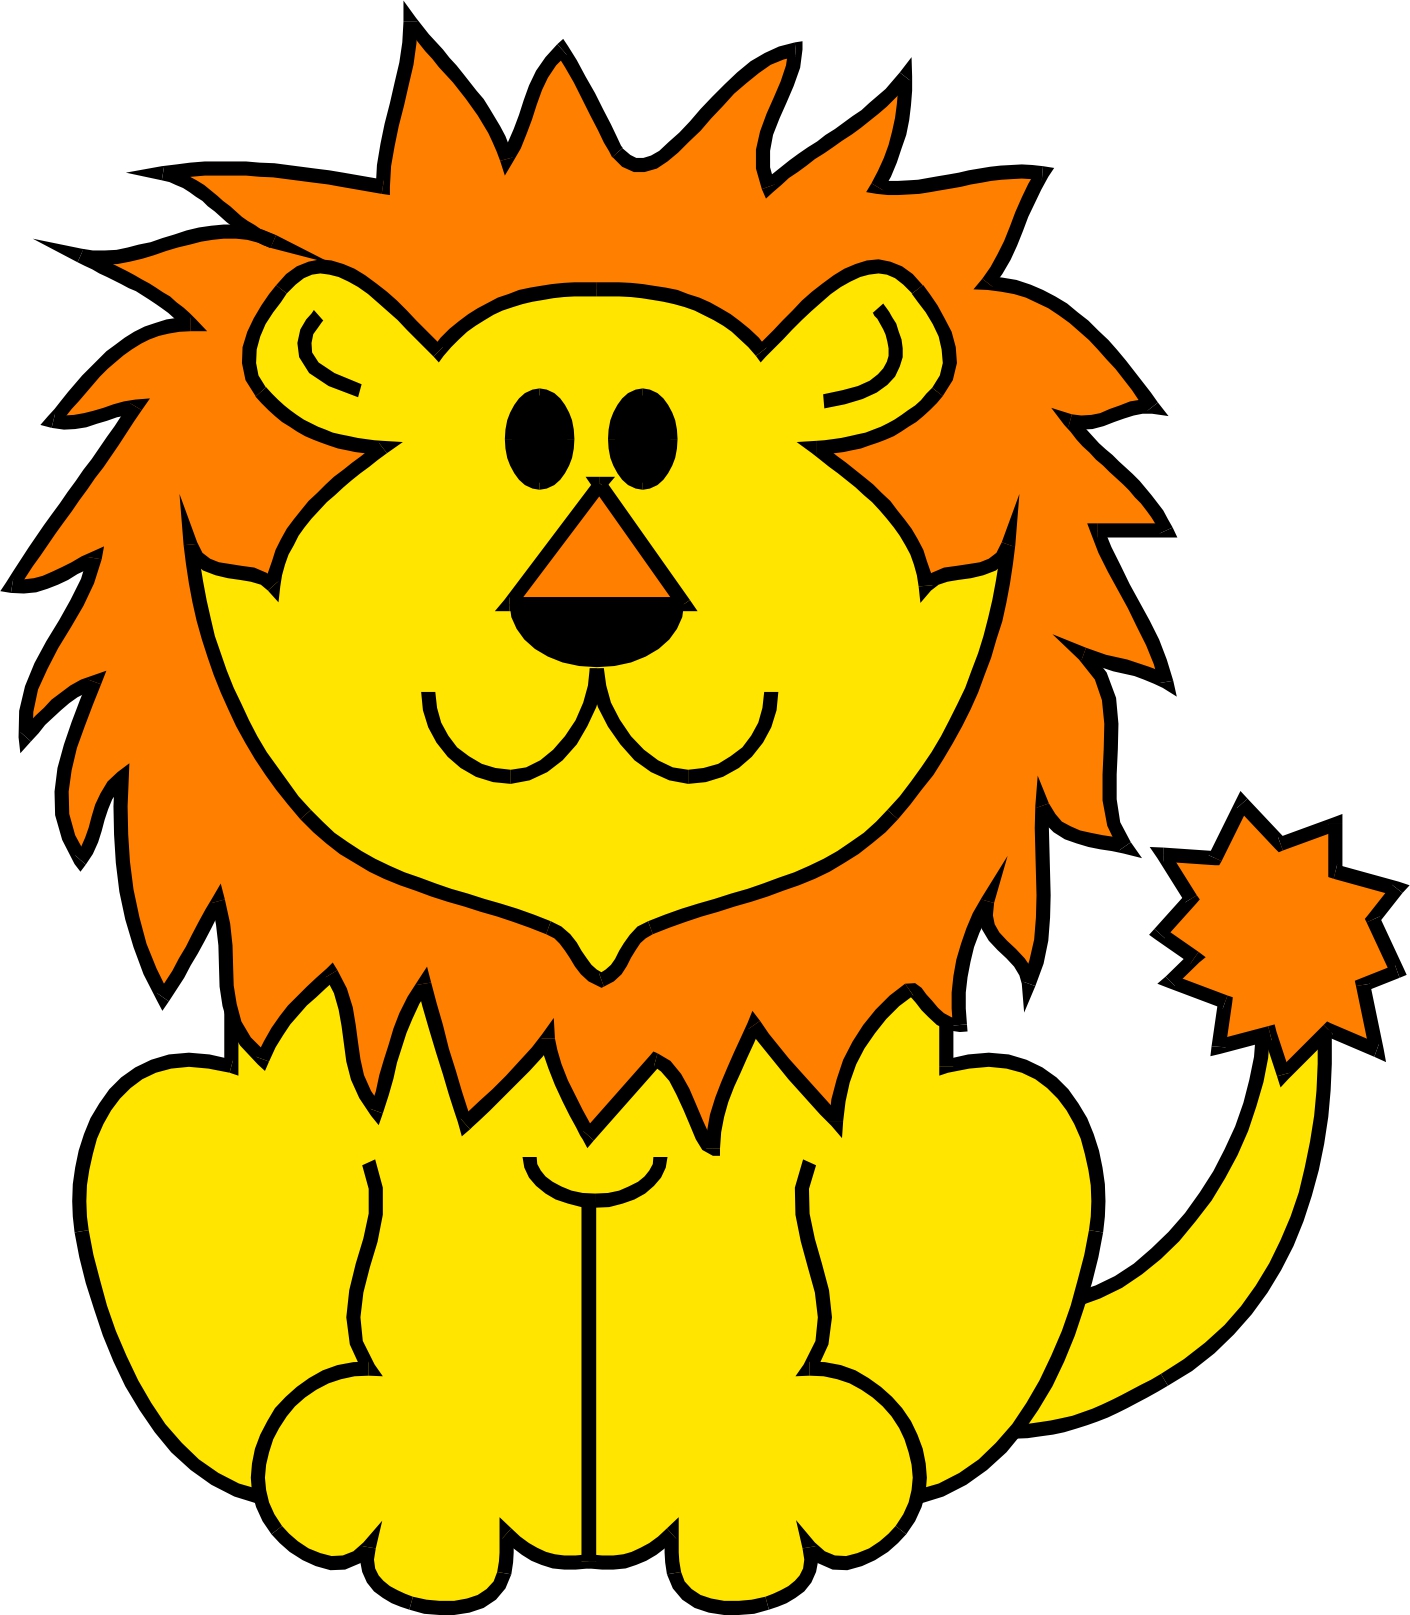 Free Lion Images Cartoon Download Free Lion Images Cartoon Png Images ...